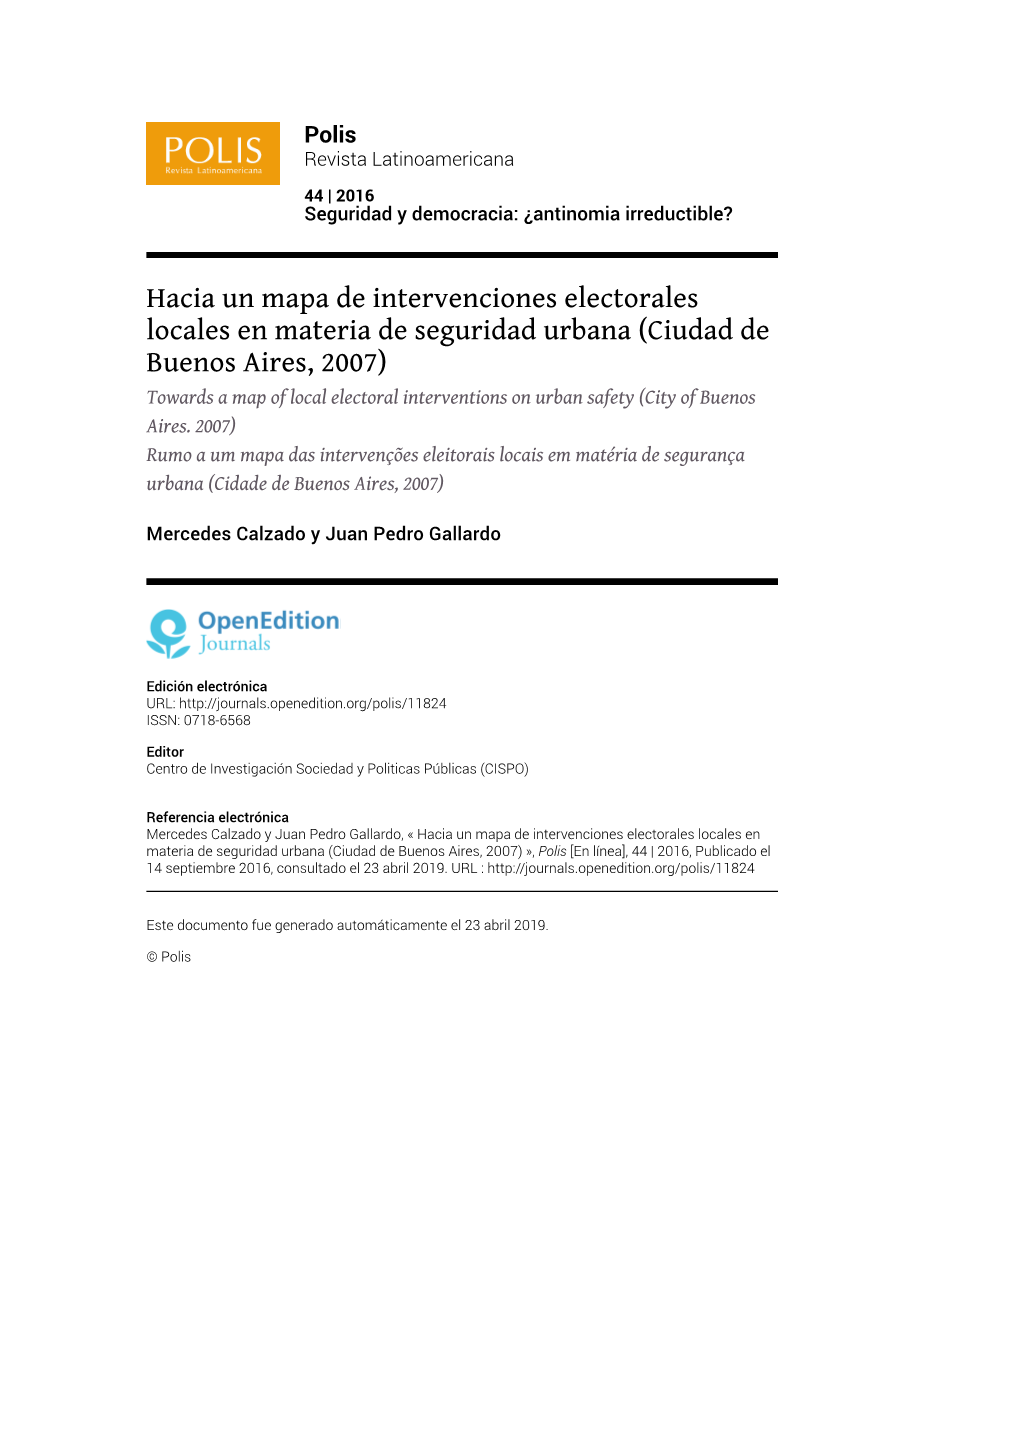 Ciudad De Buenos Aires, 2007) Towards a Map of Local Electoral Interventions on Urban Safety (City of Buenos Aires